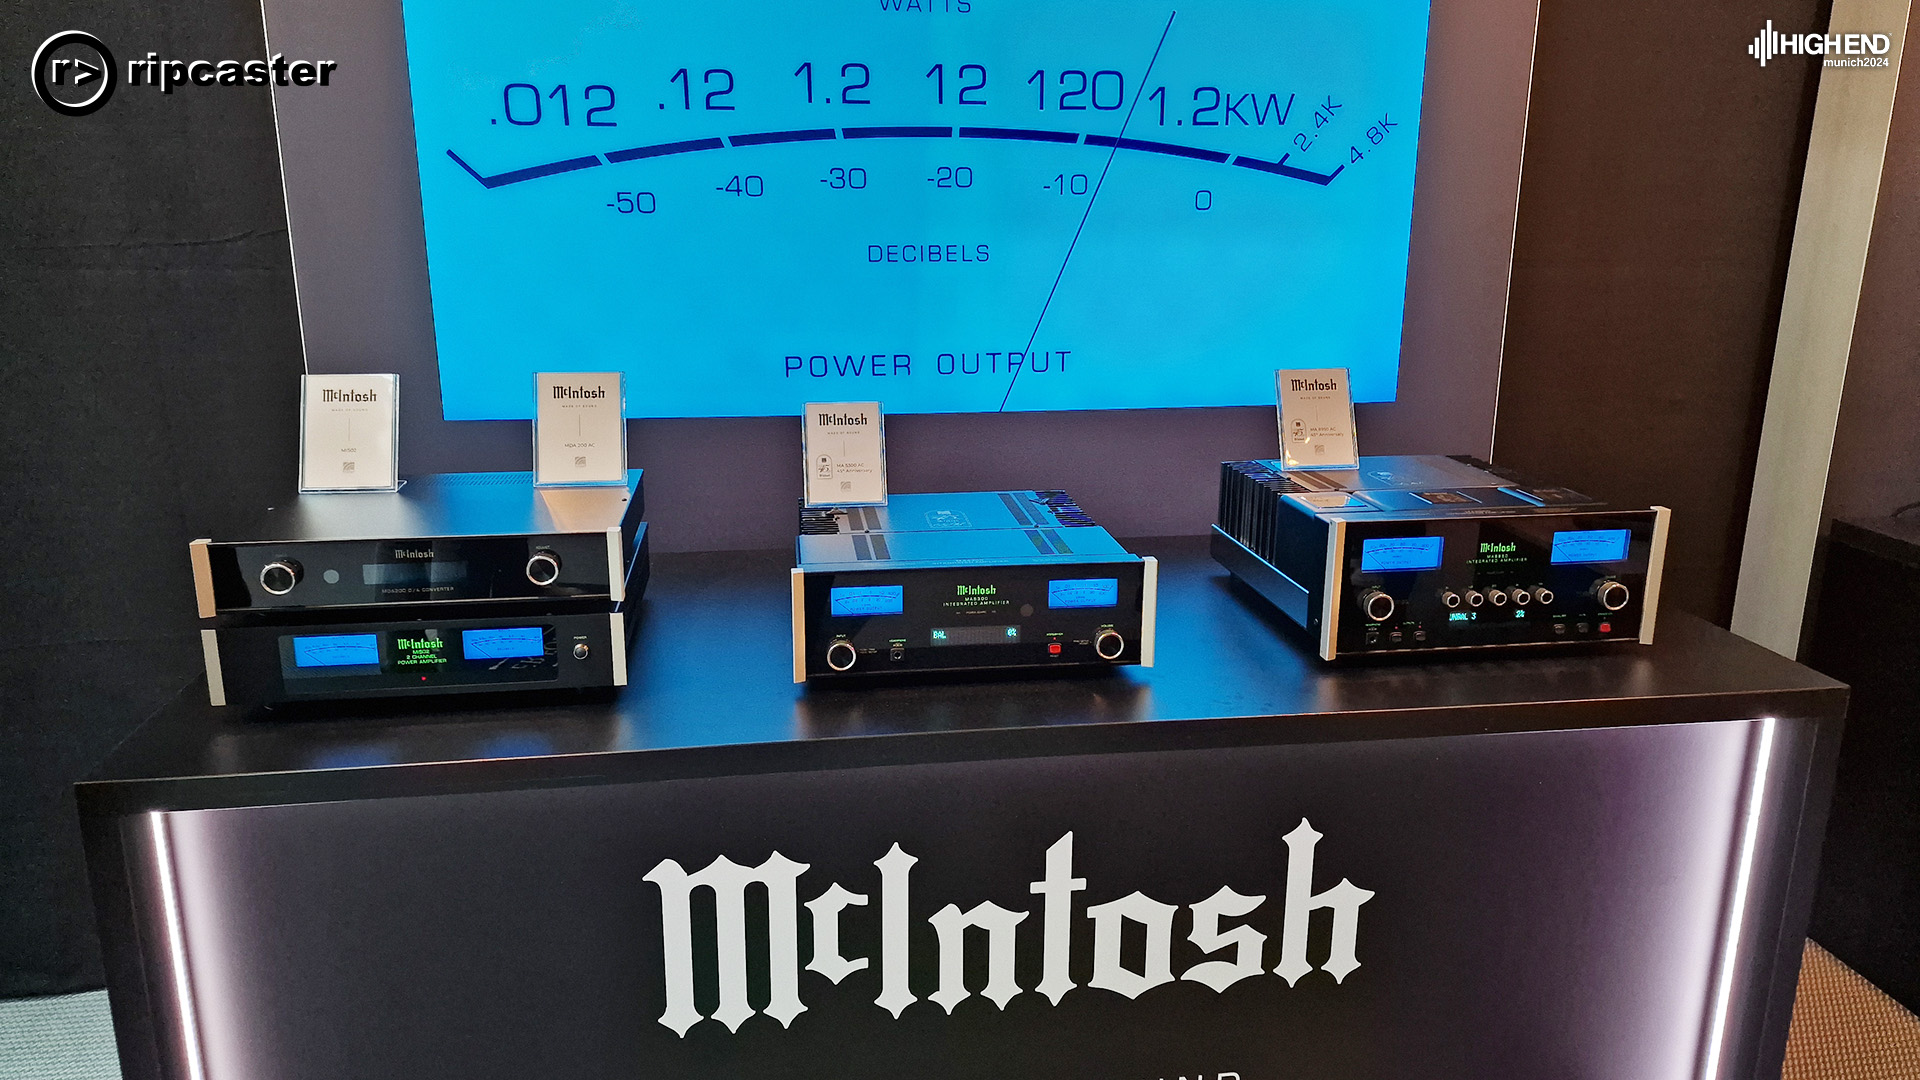 McIntosh HiFi equipment on a black table